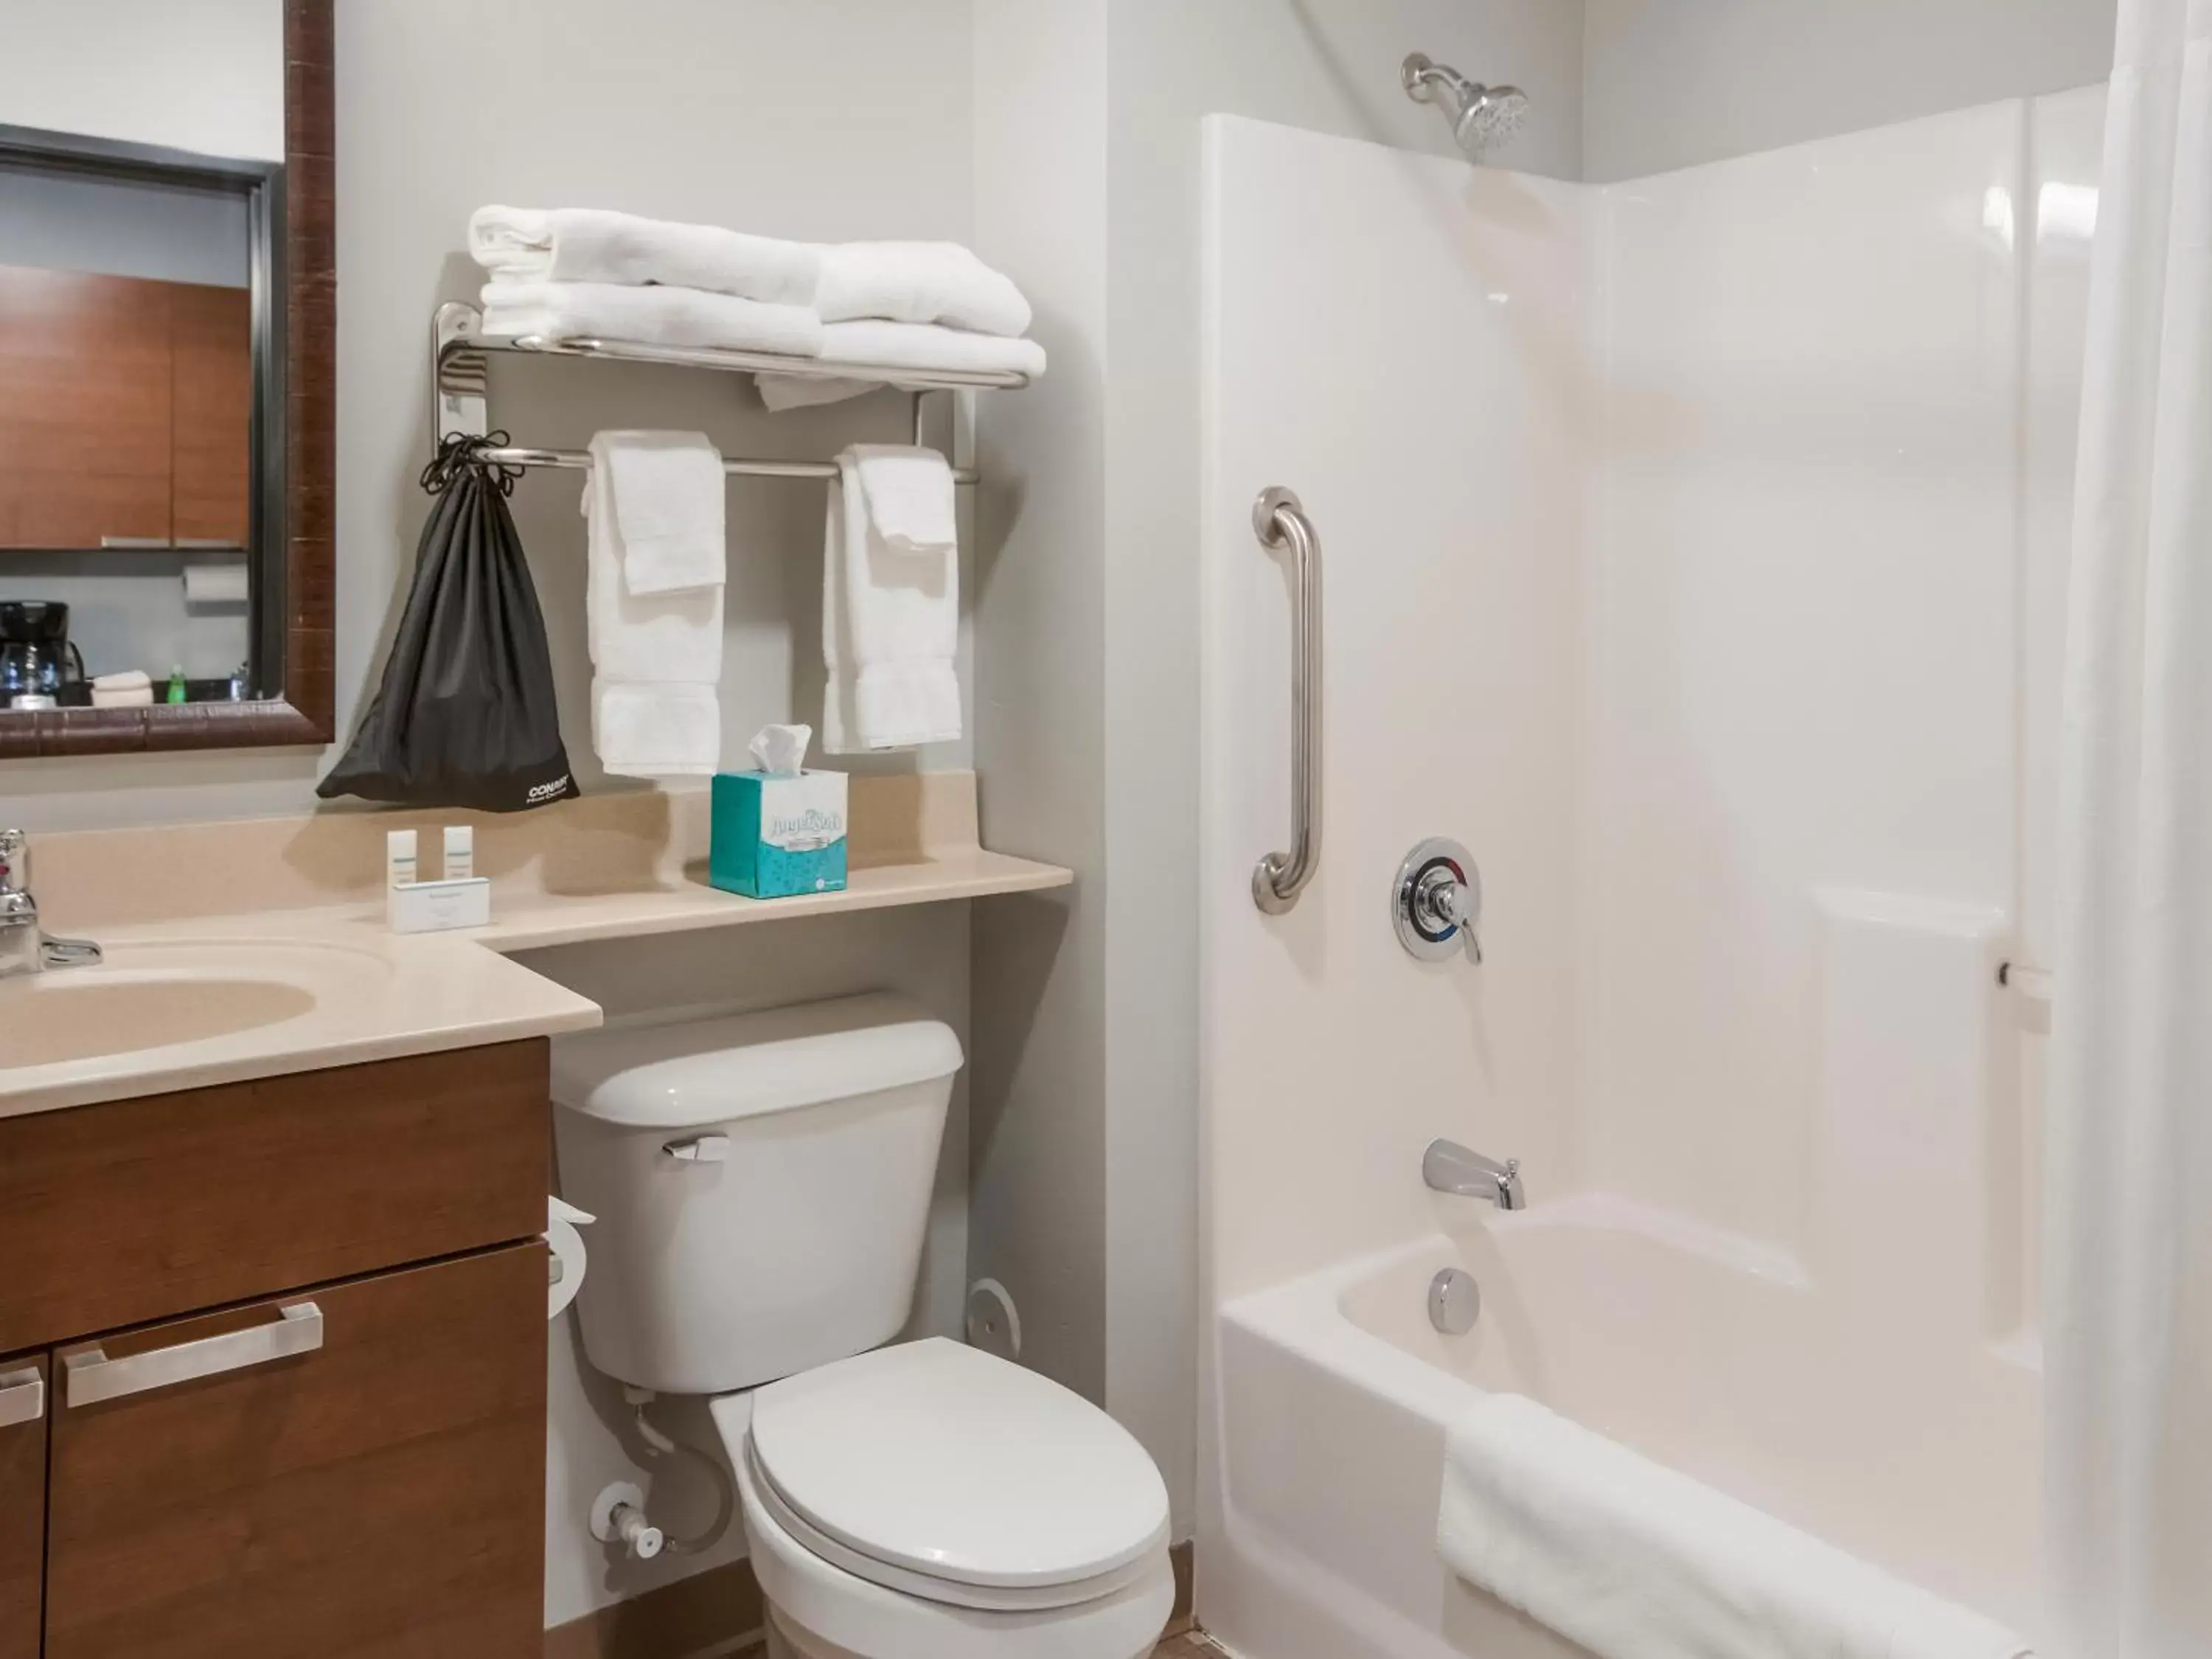 Bathroom in My Place Hotel-Boise/Meridian, ID